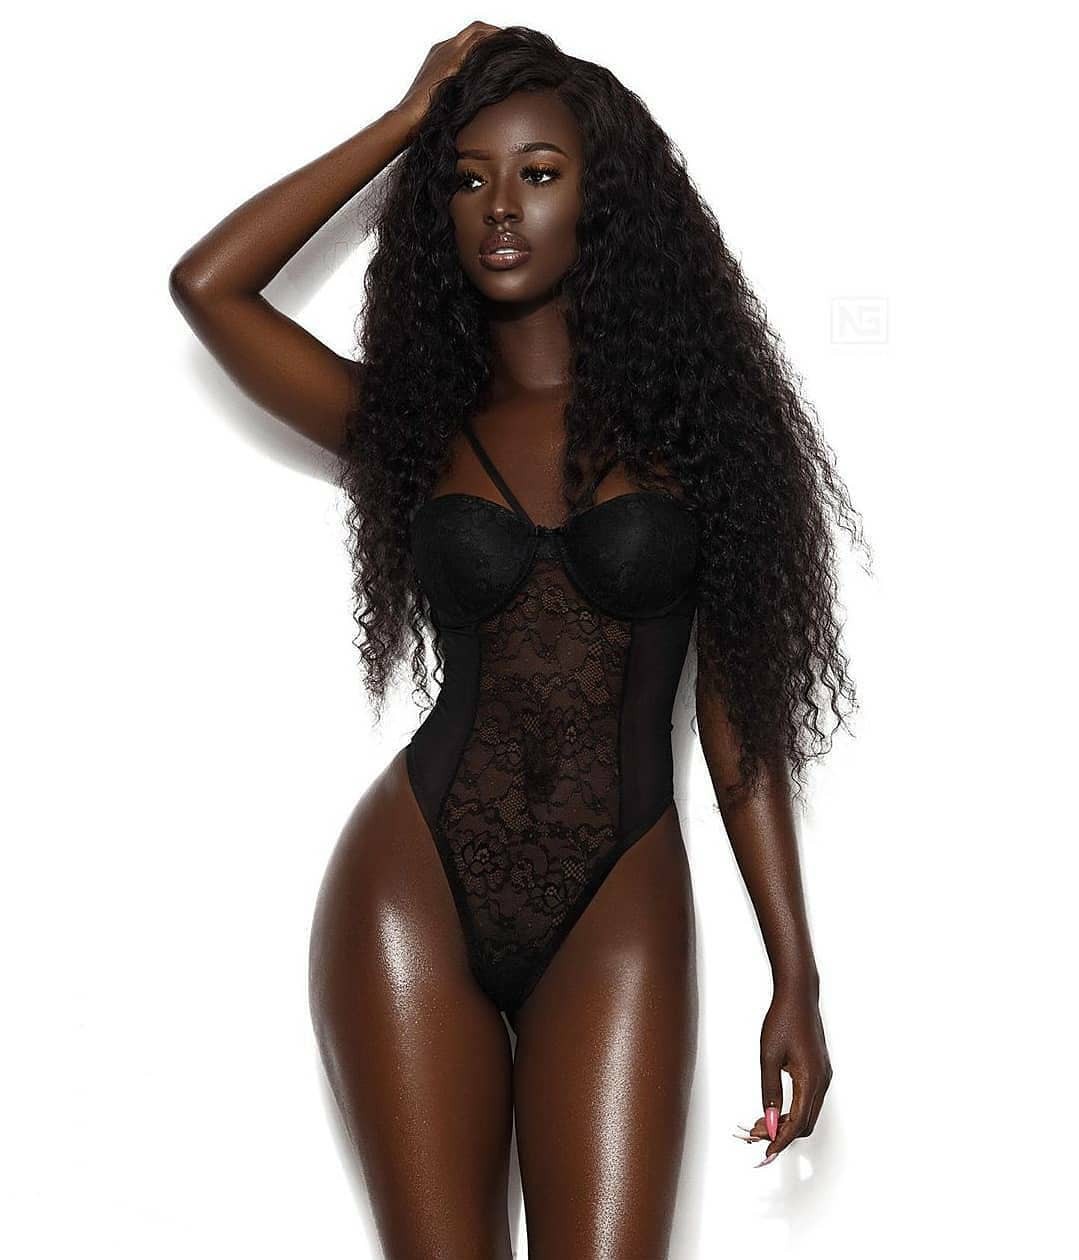 Curvy Black Teen Models Photo: Hot Black Girls,  Cute Black Girls,  Hot Instagram Teens,  Hot Bikini Pics,  Black Girls Sexy Photos,  Sexy Black Girls,  Black girls,  Hot Ebony Beauty  